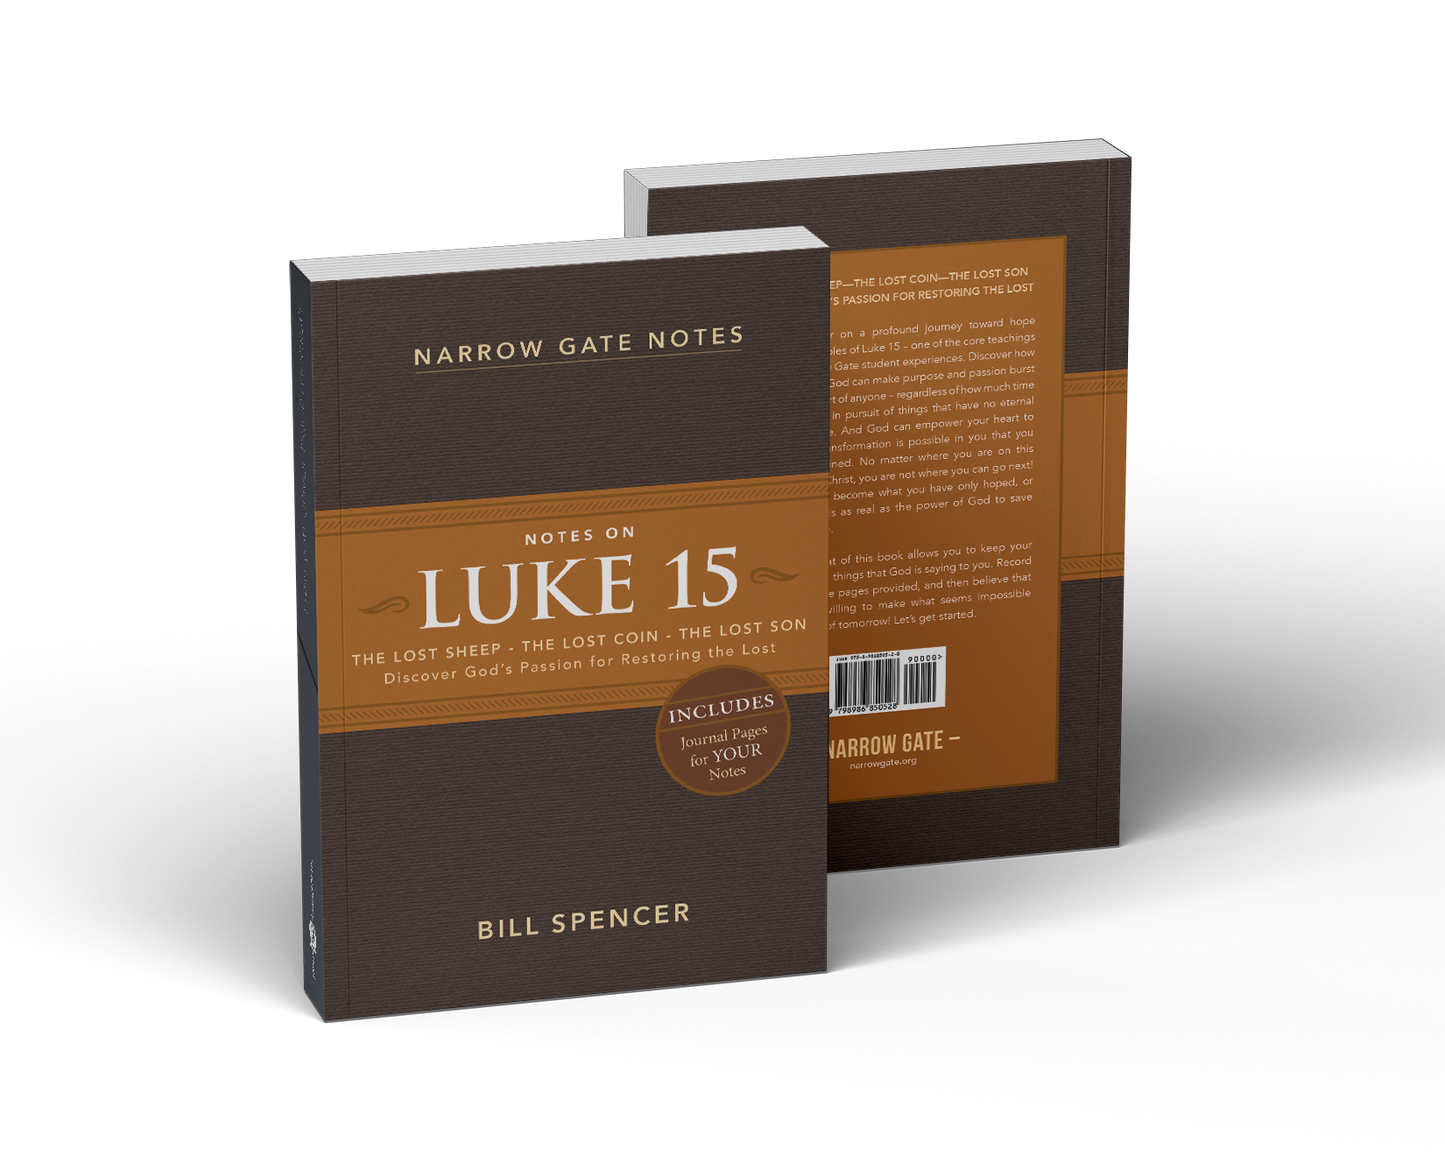 Notes on Luke 15